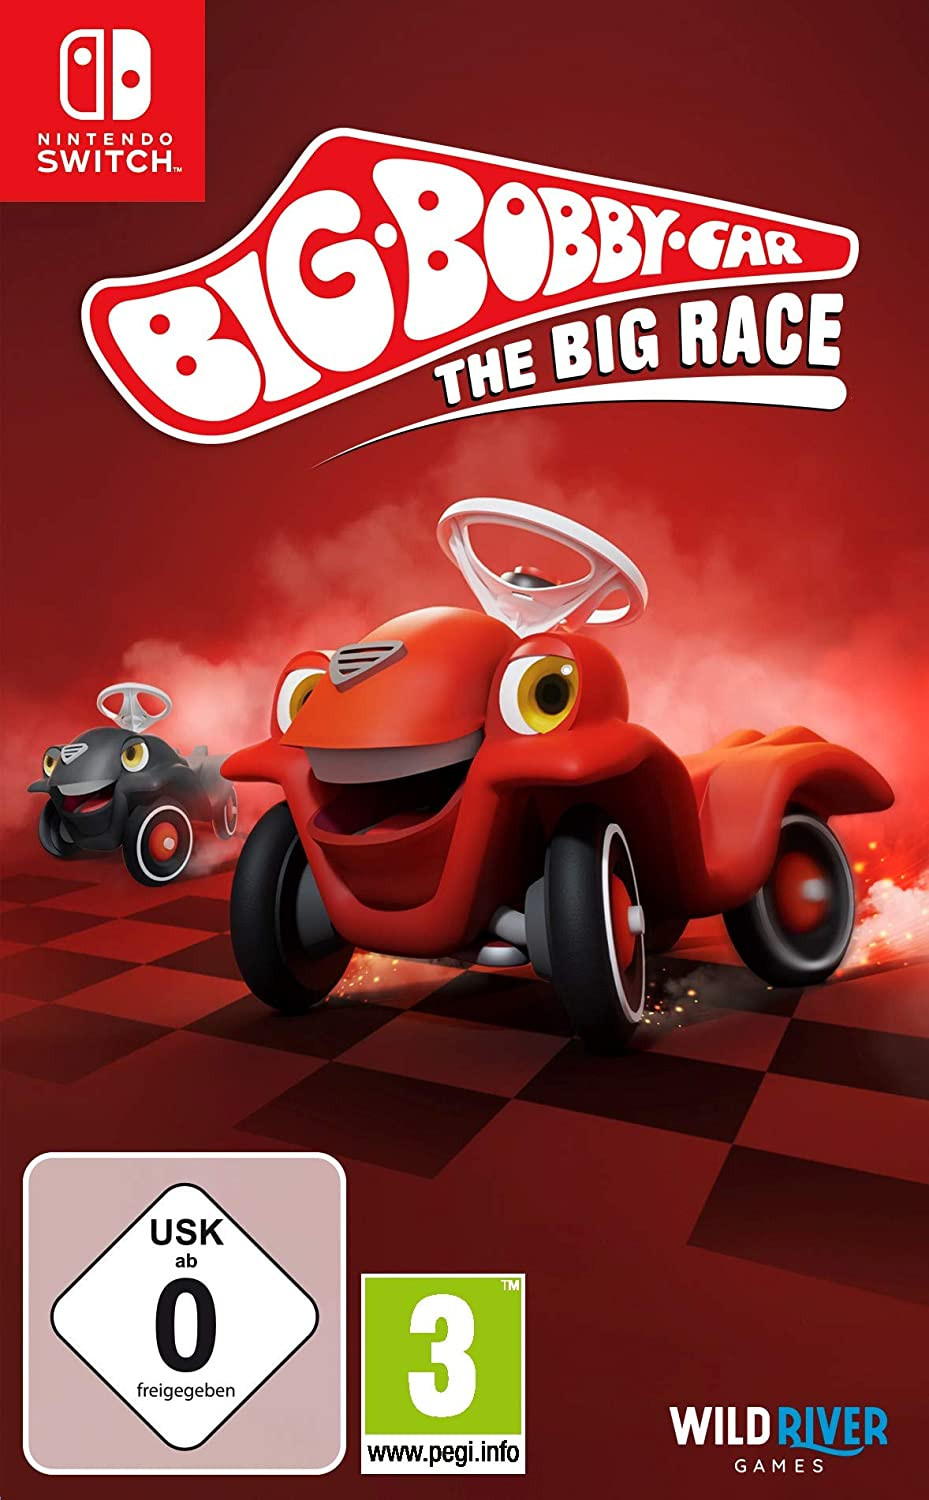 Big Bobby Car the Big Race - Nintendo Switch